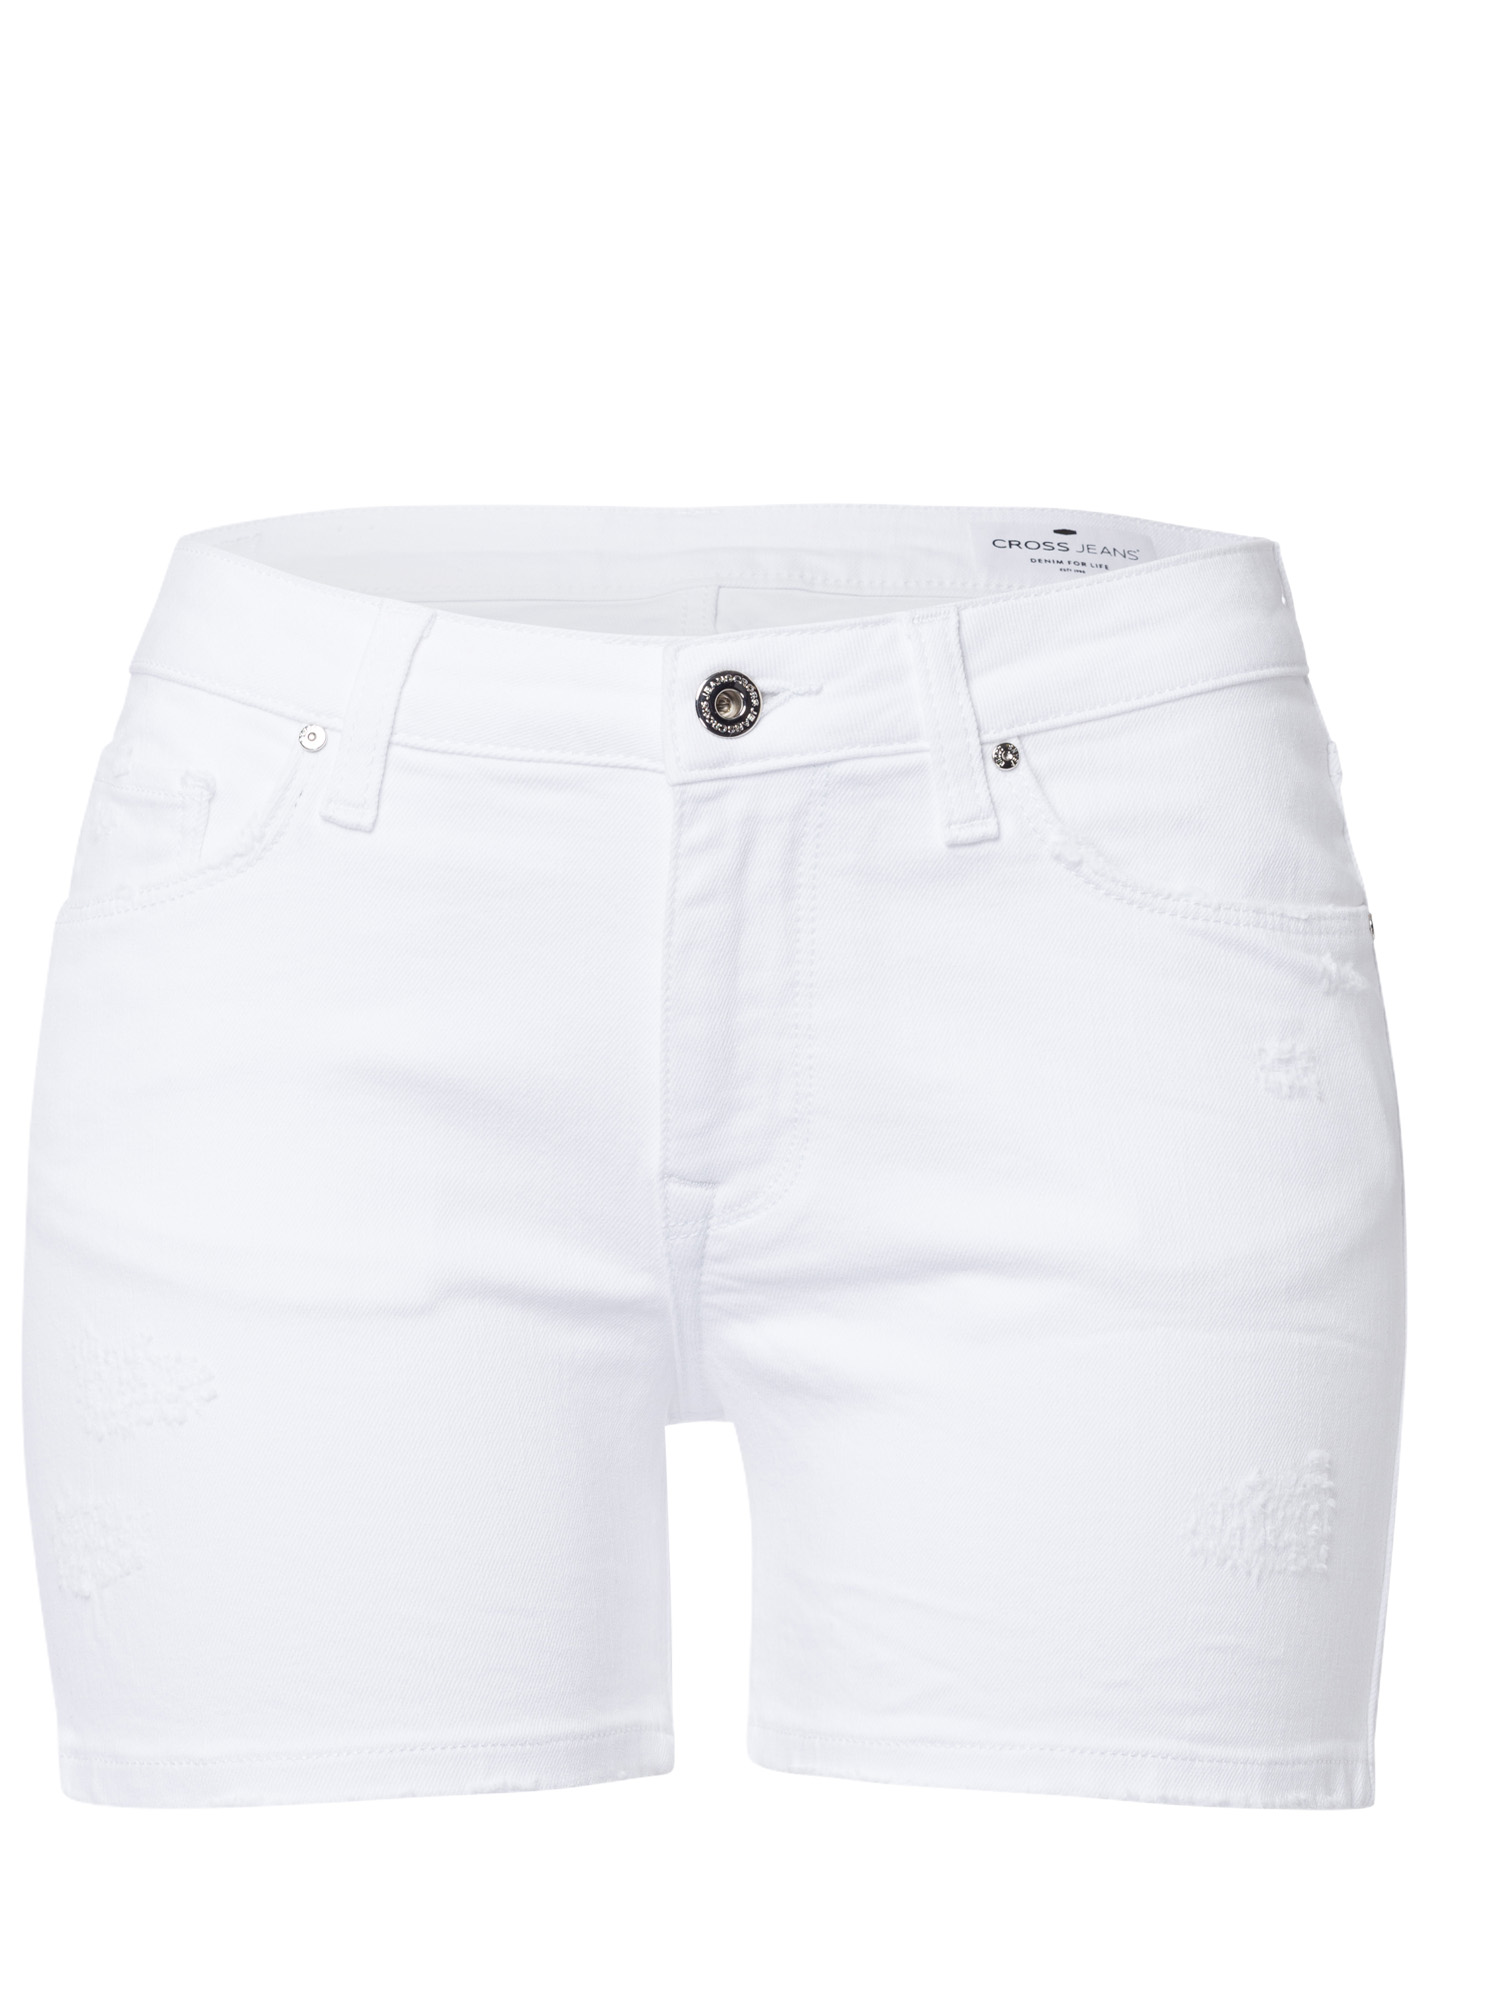 Шорты Cross Jeans для женщин, A 529-008, размер 27, белые